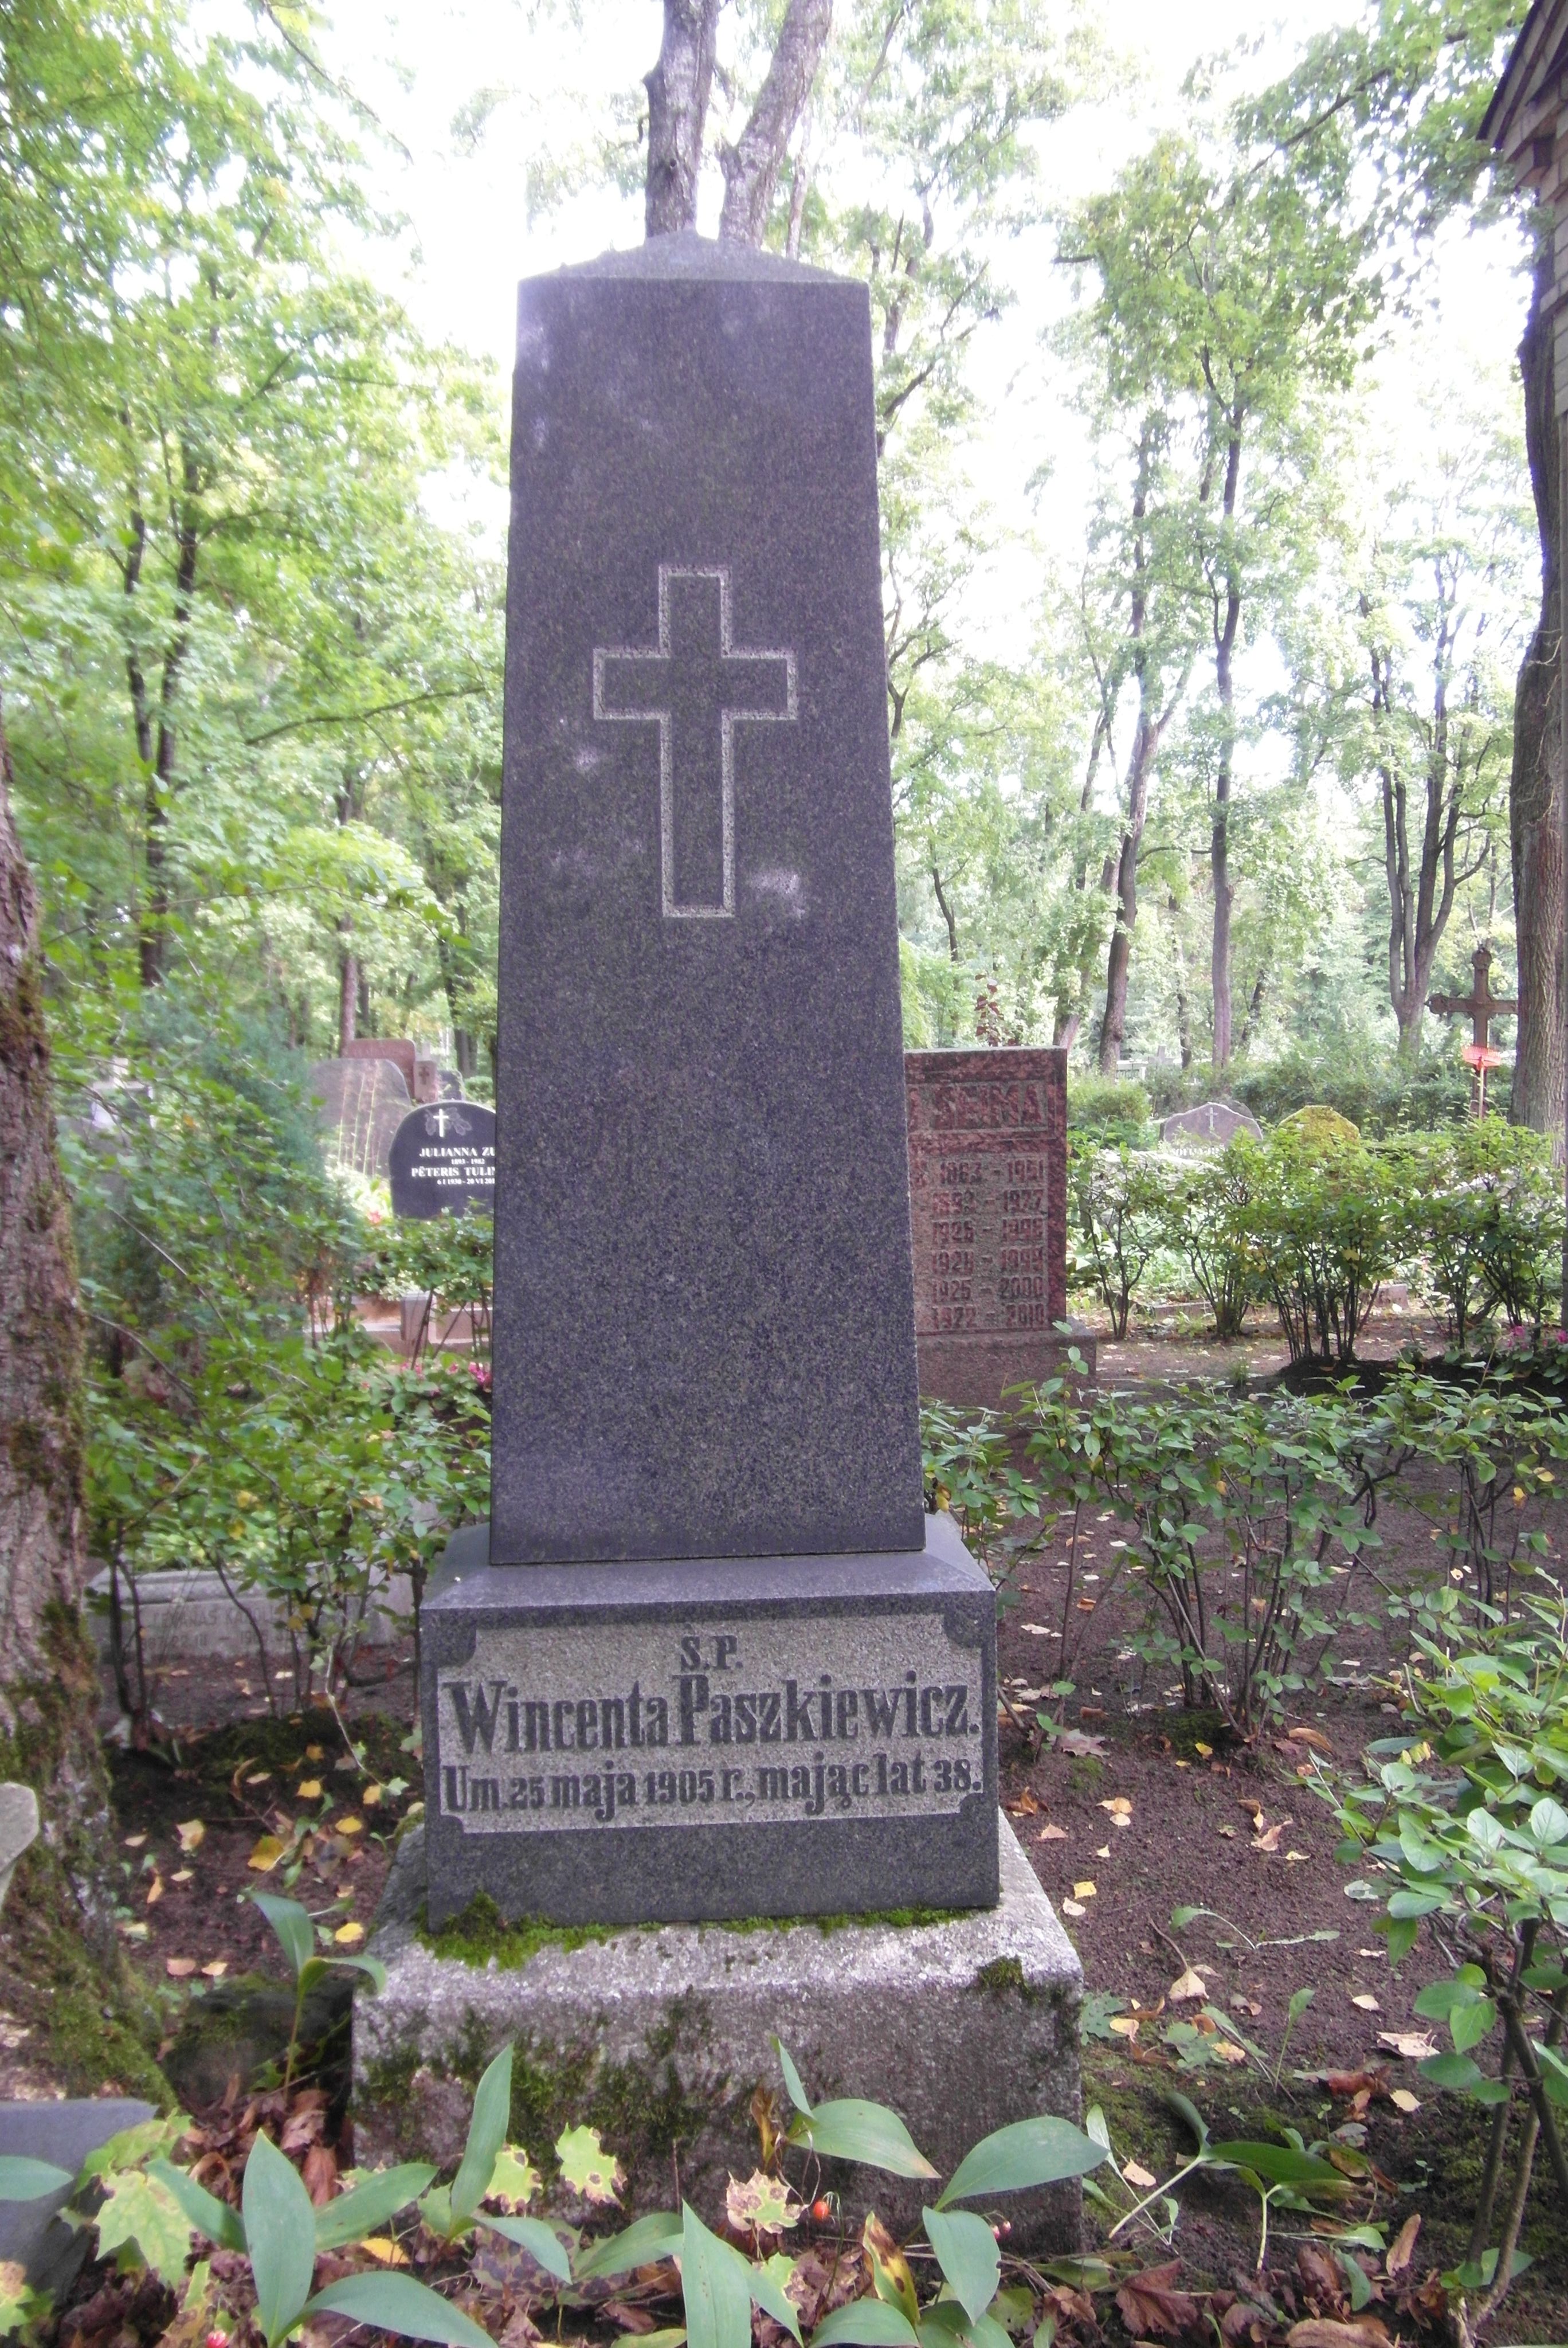 Tombstone of Wanda Paszkiewicz, St Michael's cemetery in Riga, as of 2021.